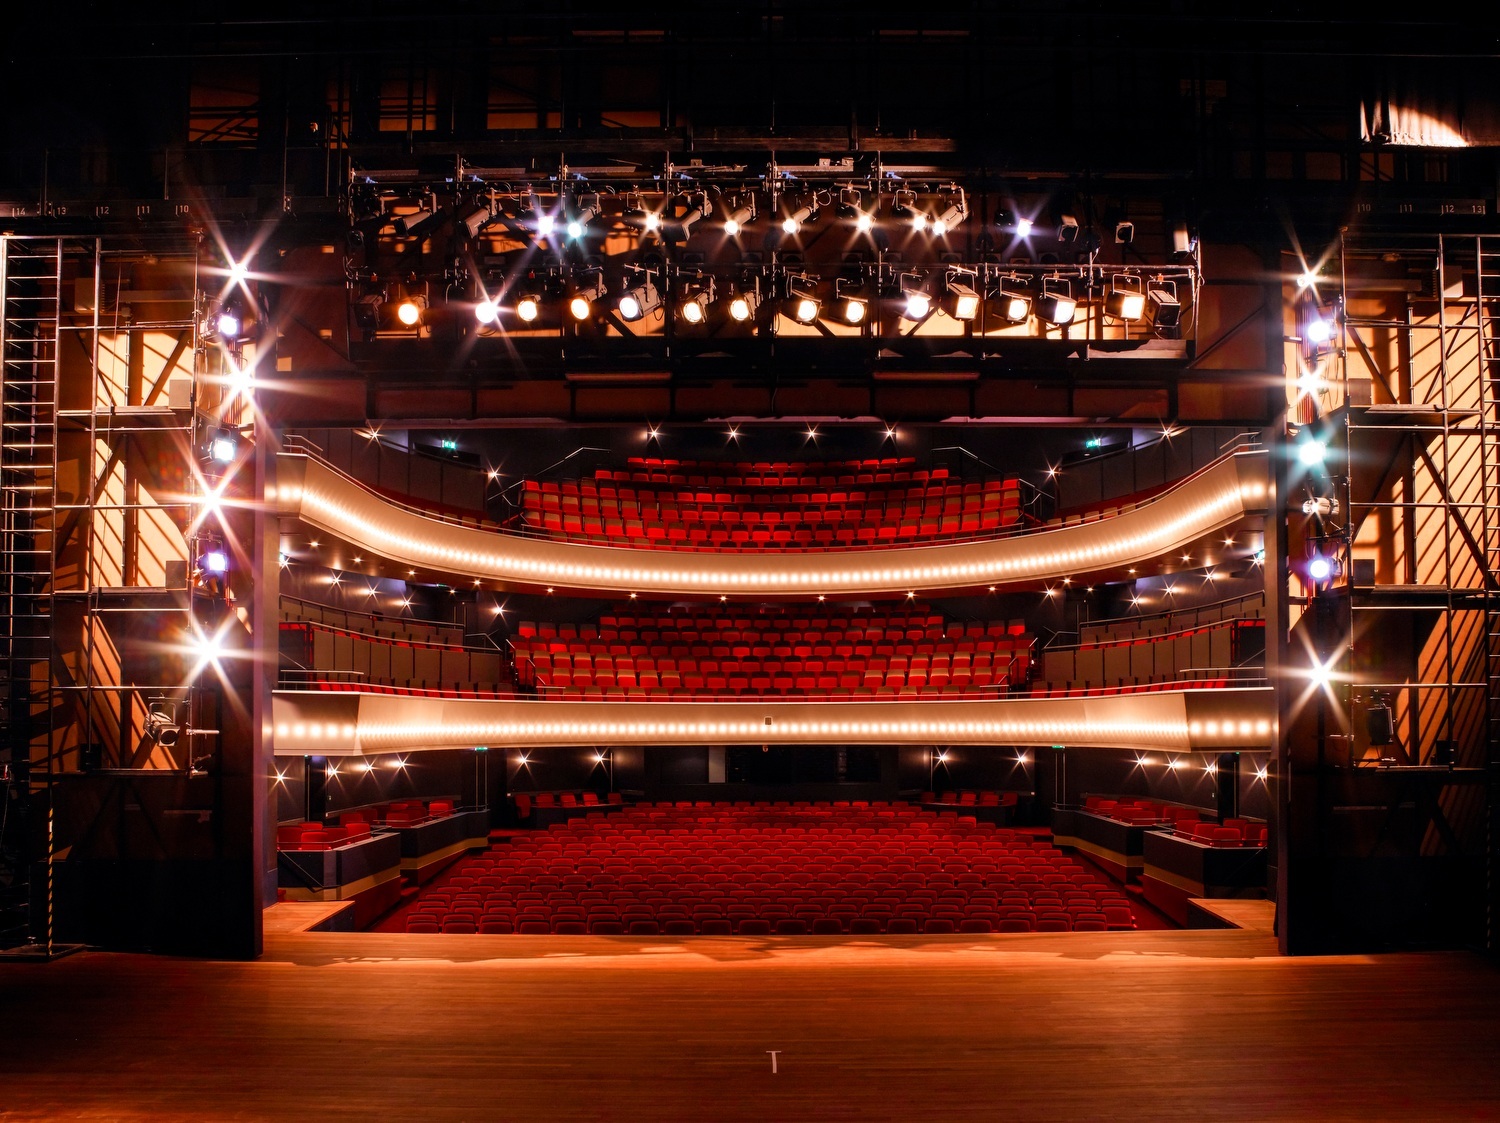 Theater de. Рамповый свет в театре. Театр де ГАЗ. Theatre de kampanje, Нидерланды, 2015. Theater Light.